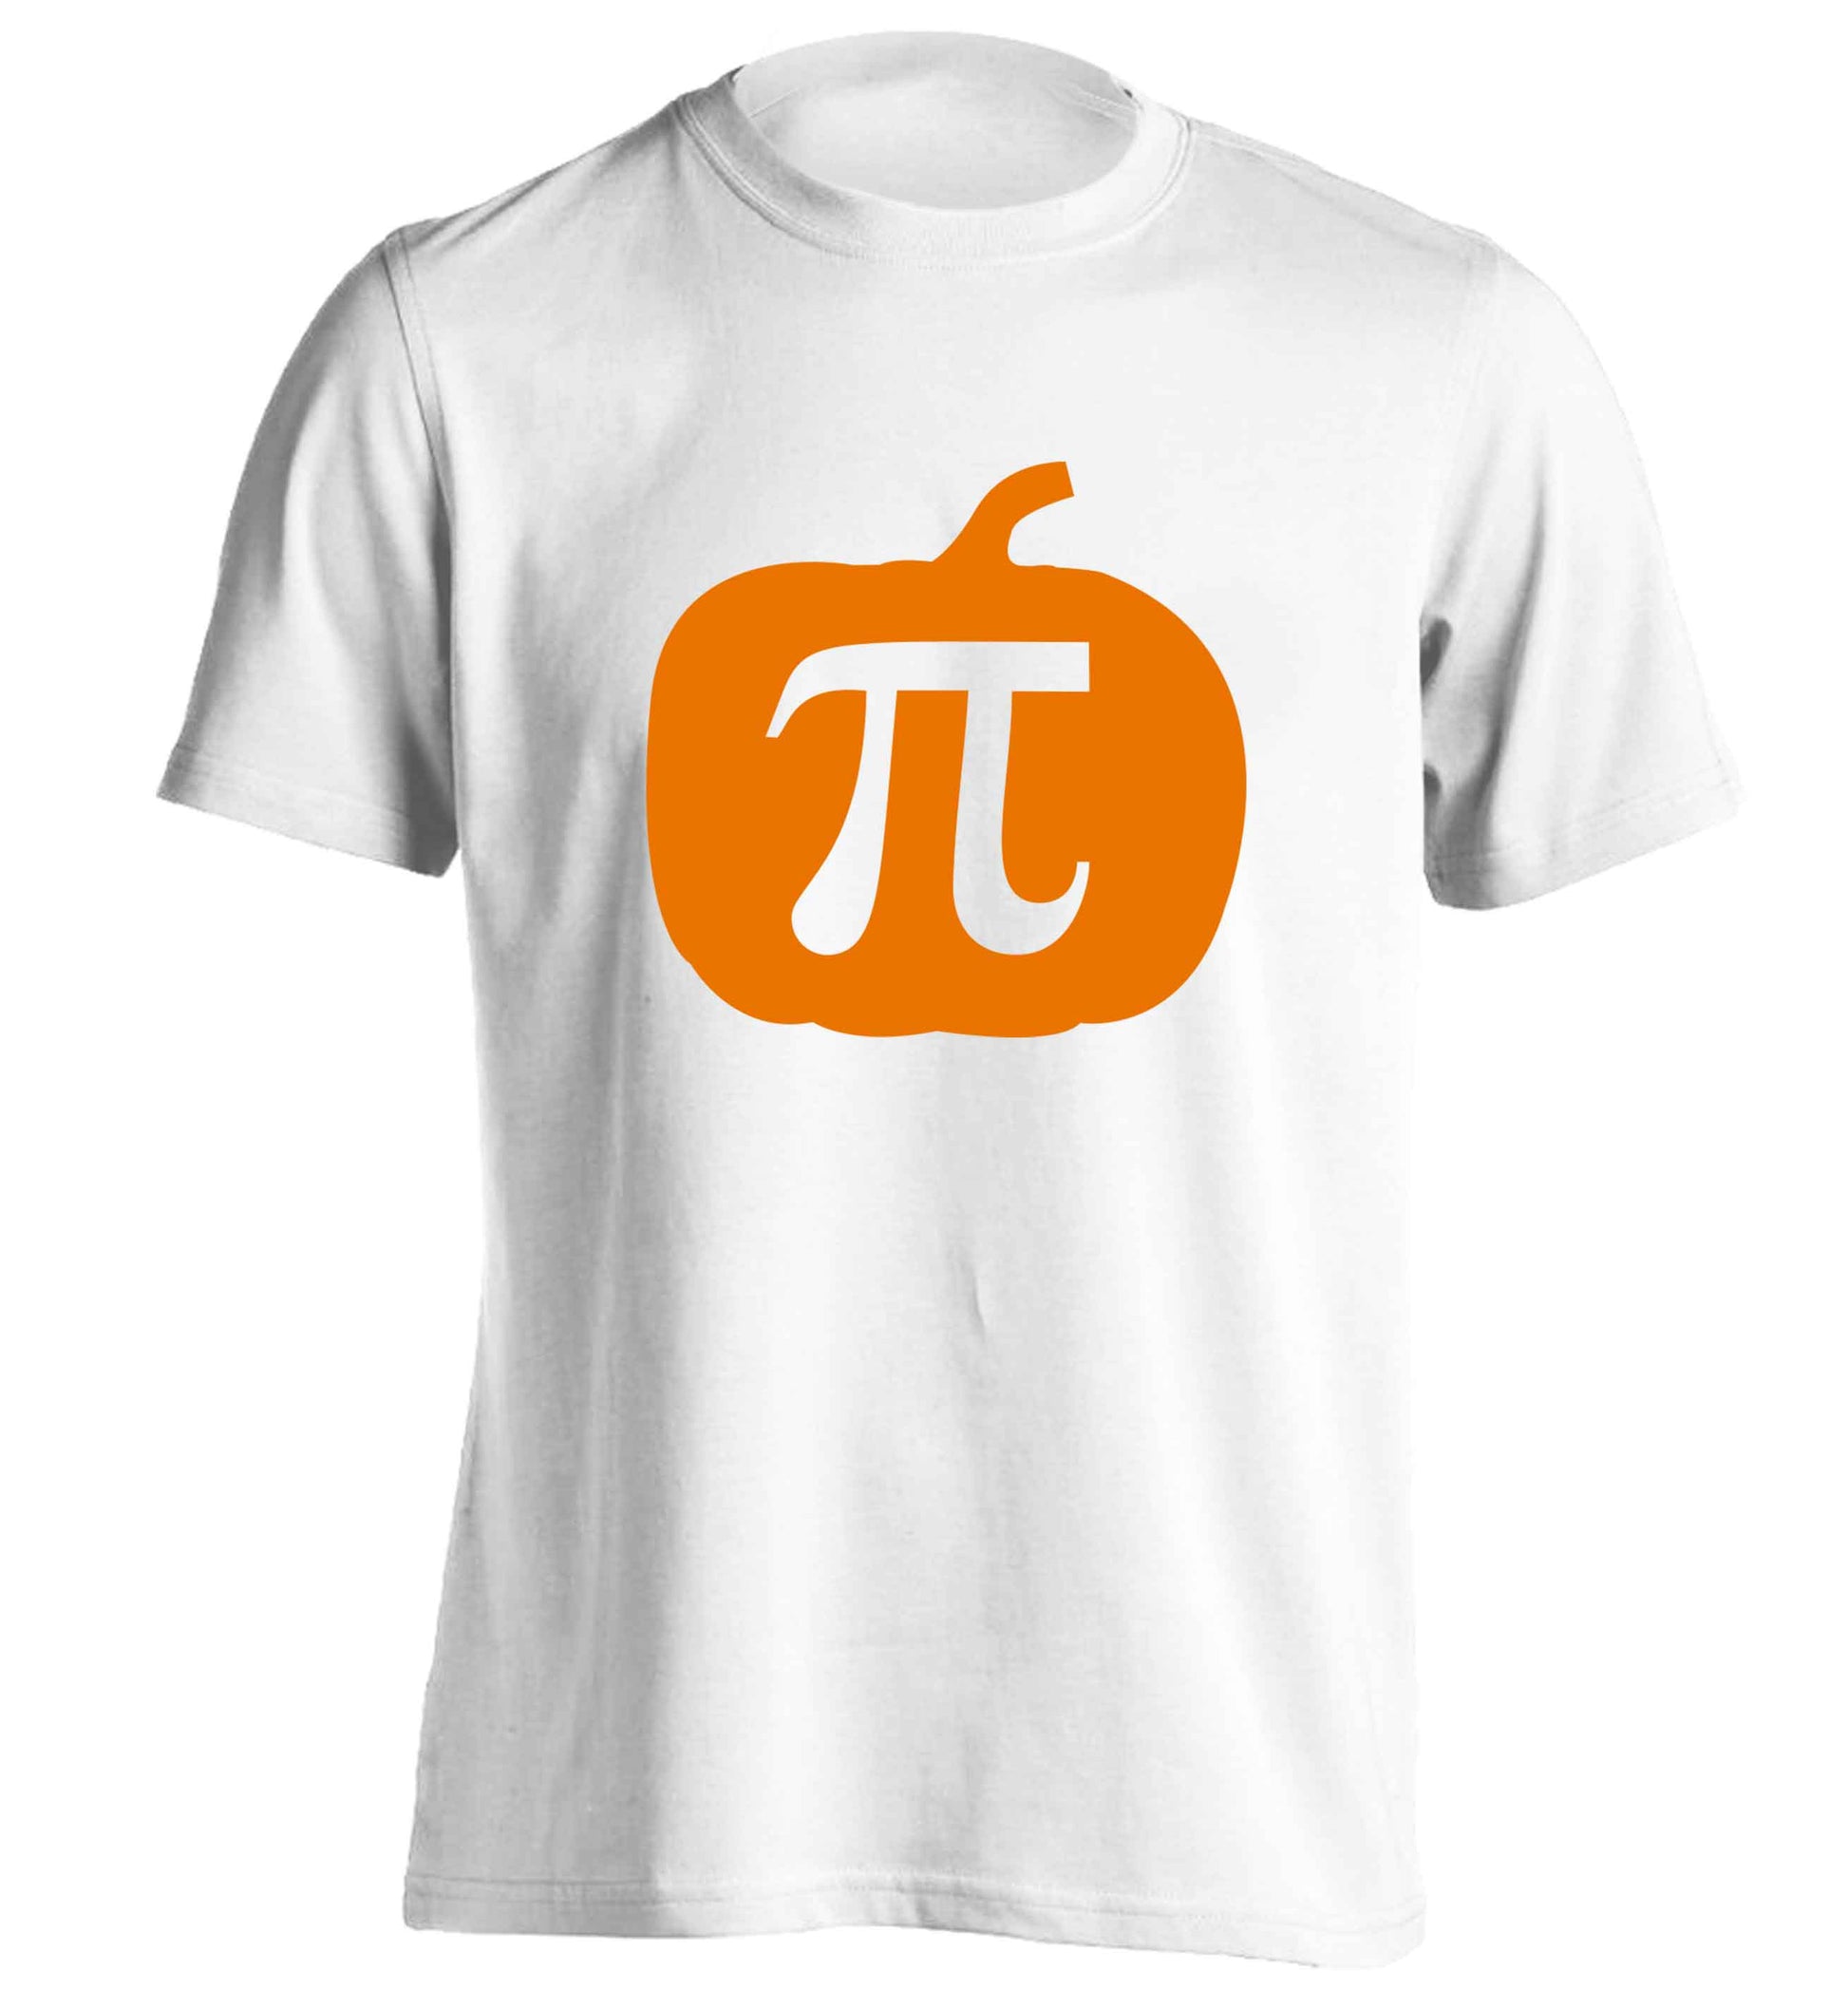 Pumpkin Pie adults unisex white Tshirt 2XL